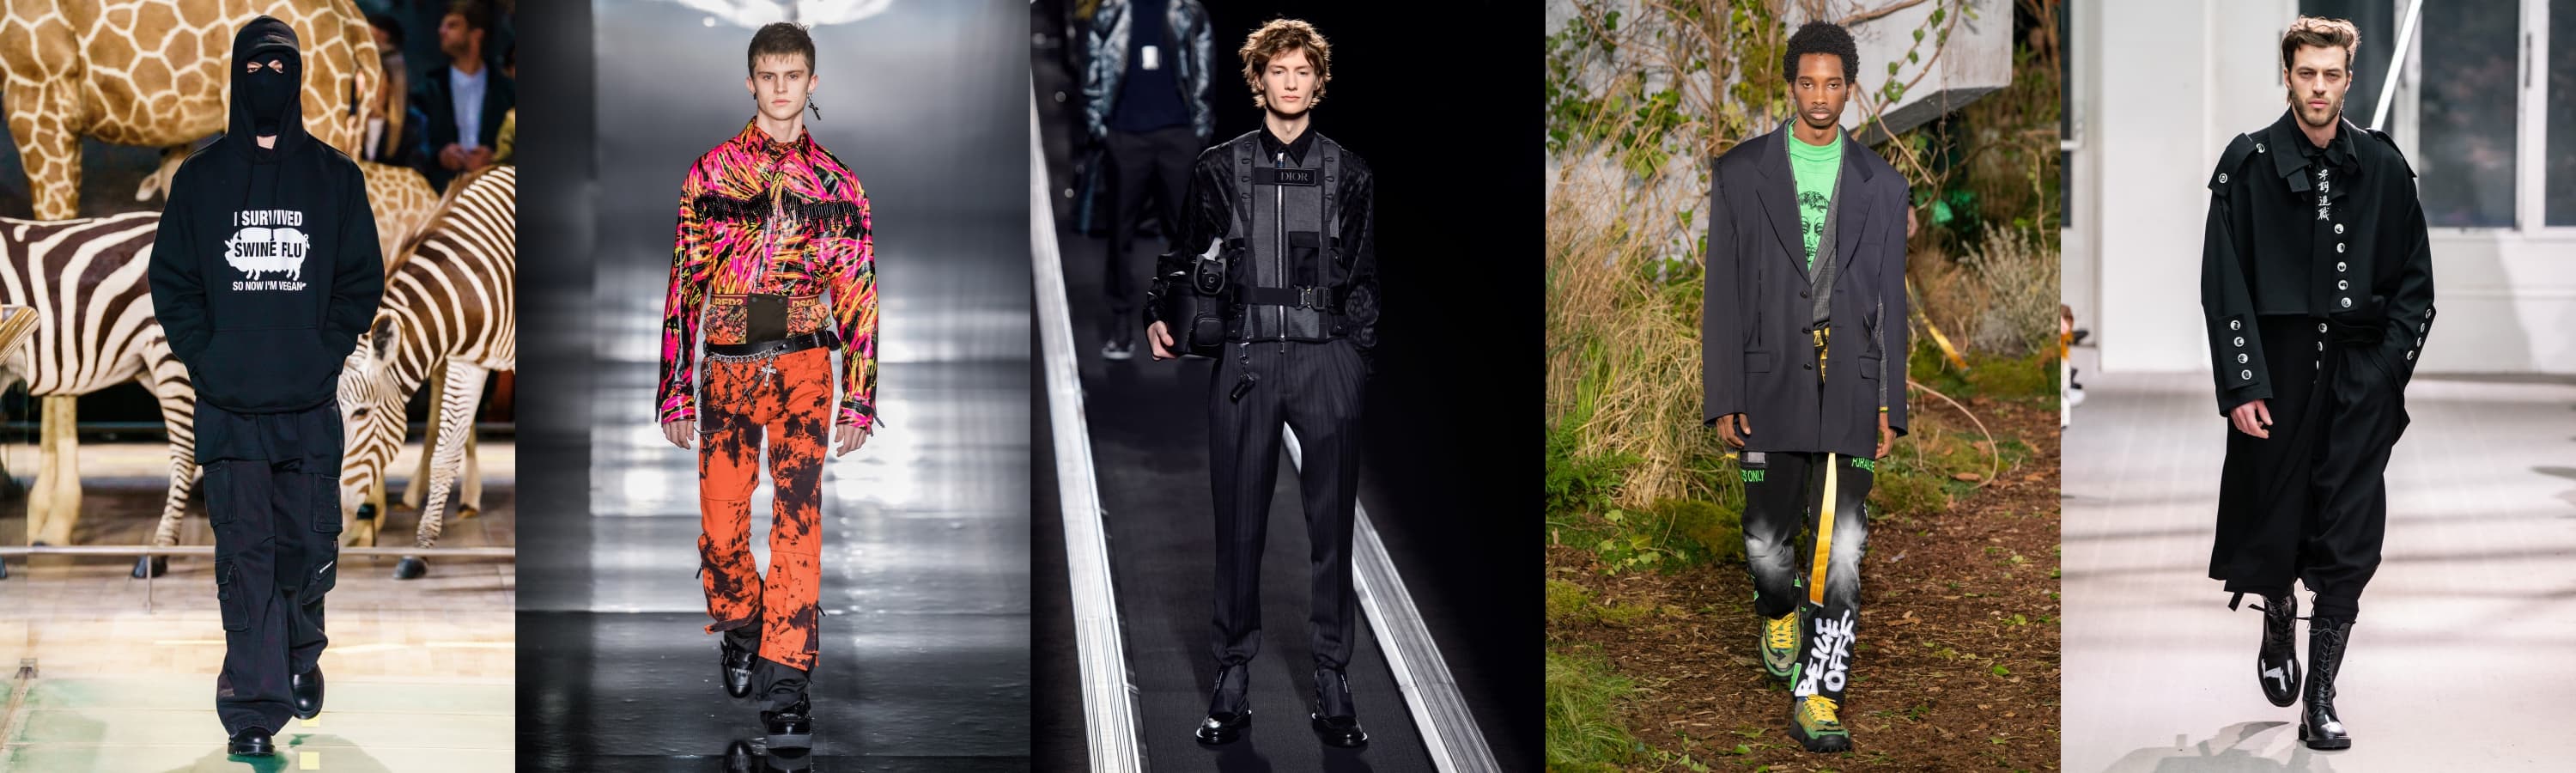 Streetwear trends spotted at Paris Fashion Week Men’s FW2019